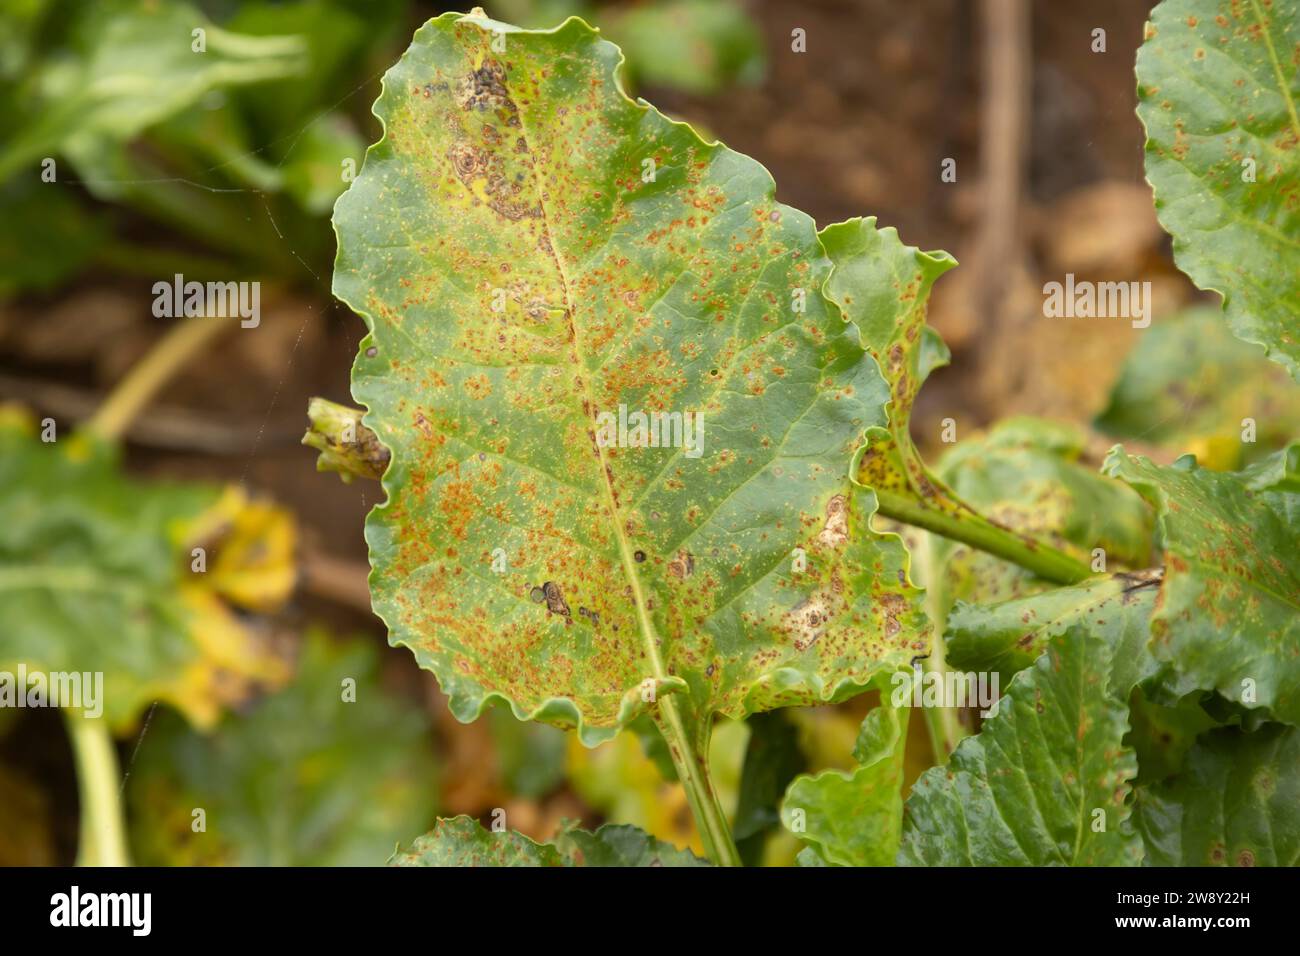 Sugar beet (Beta vulgaris) crop leaf infected with Rust (Uromyces beticola) foliar disease in an agricultural arable field, England, United Kingdom Stock Photo